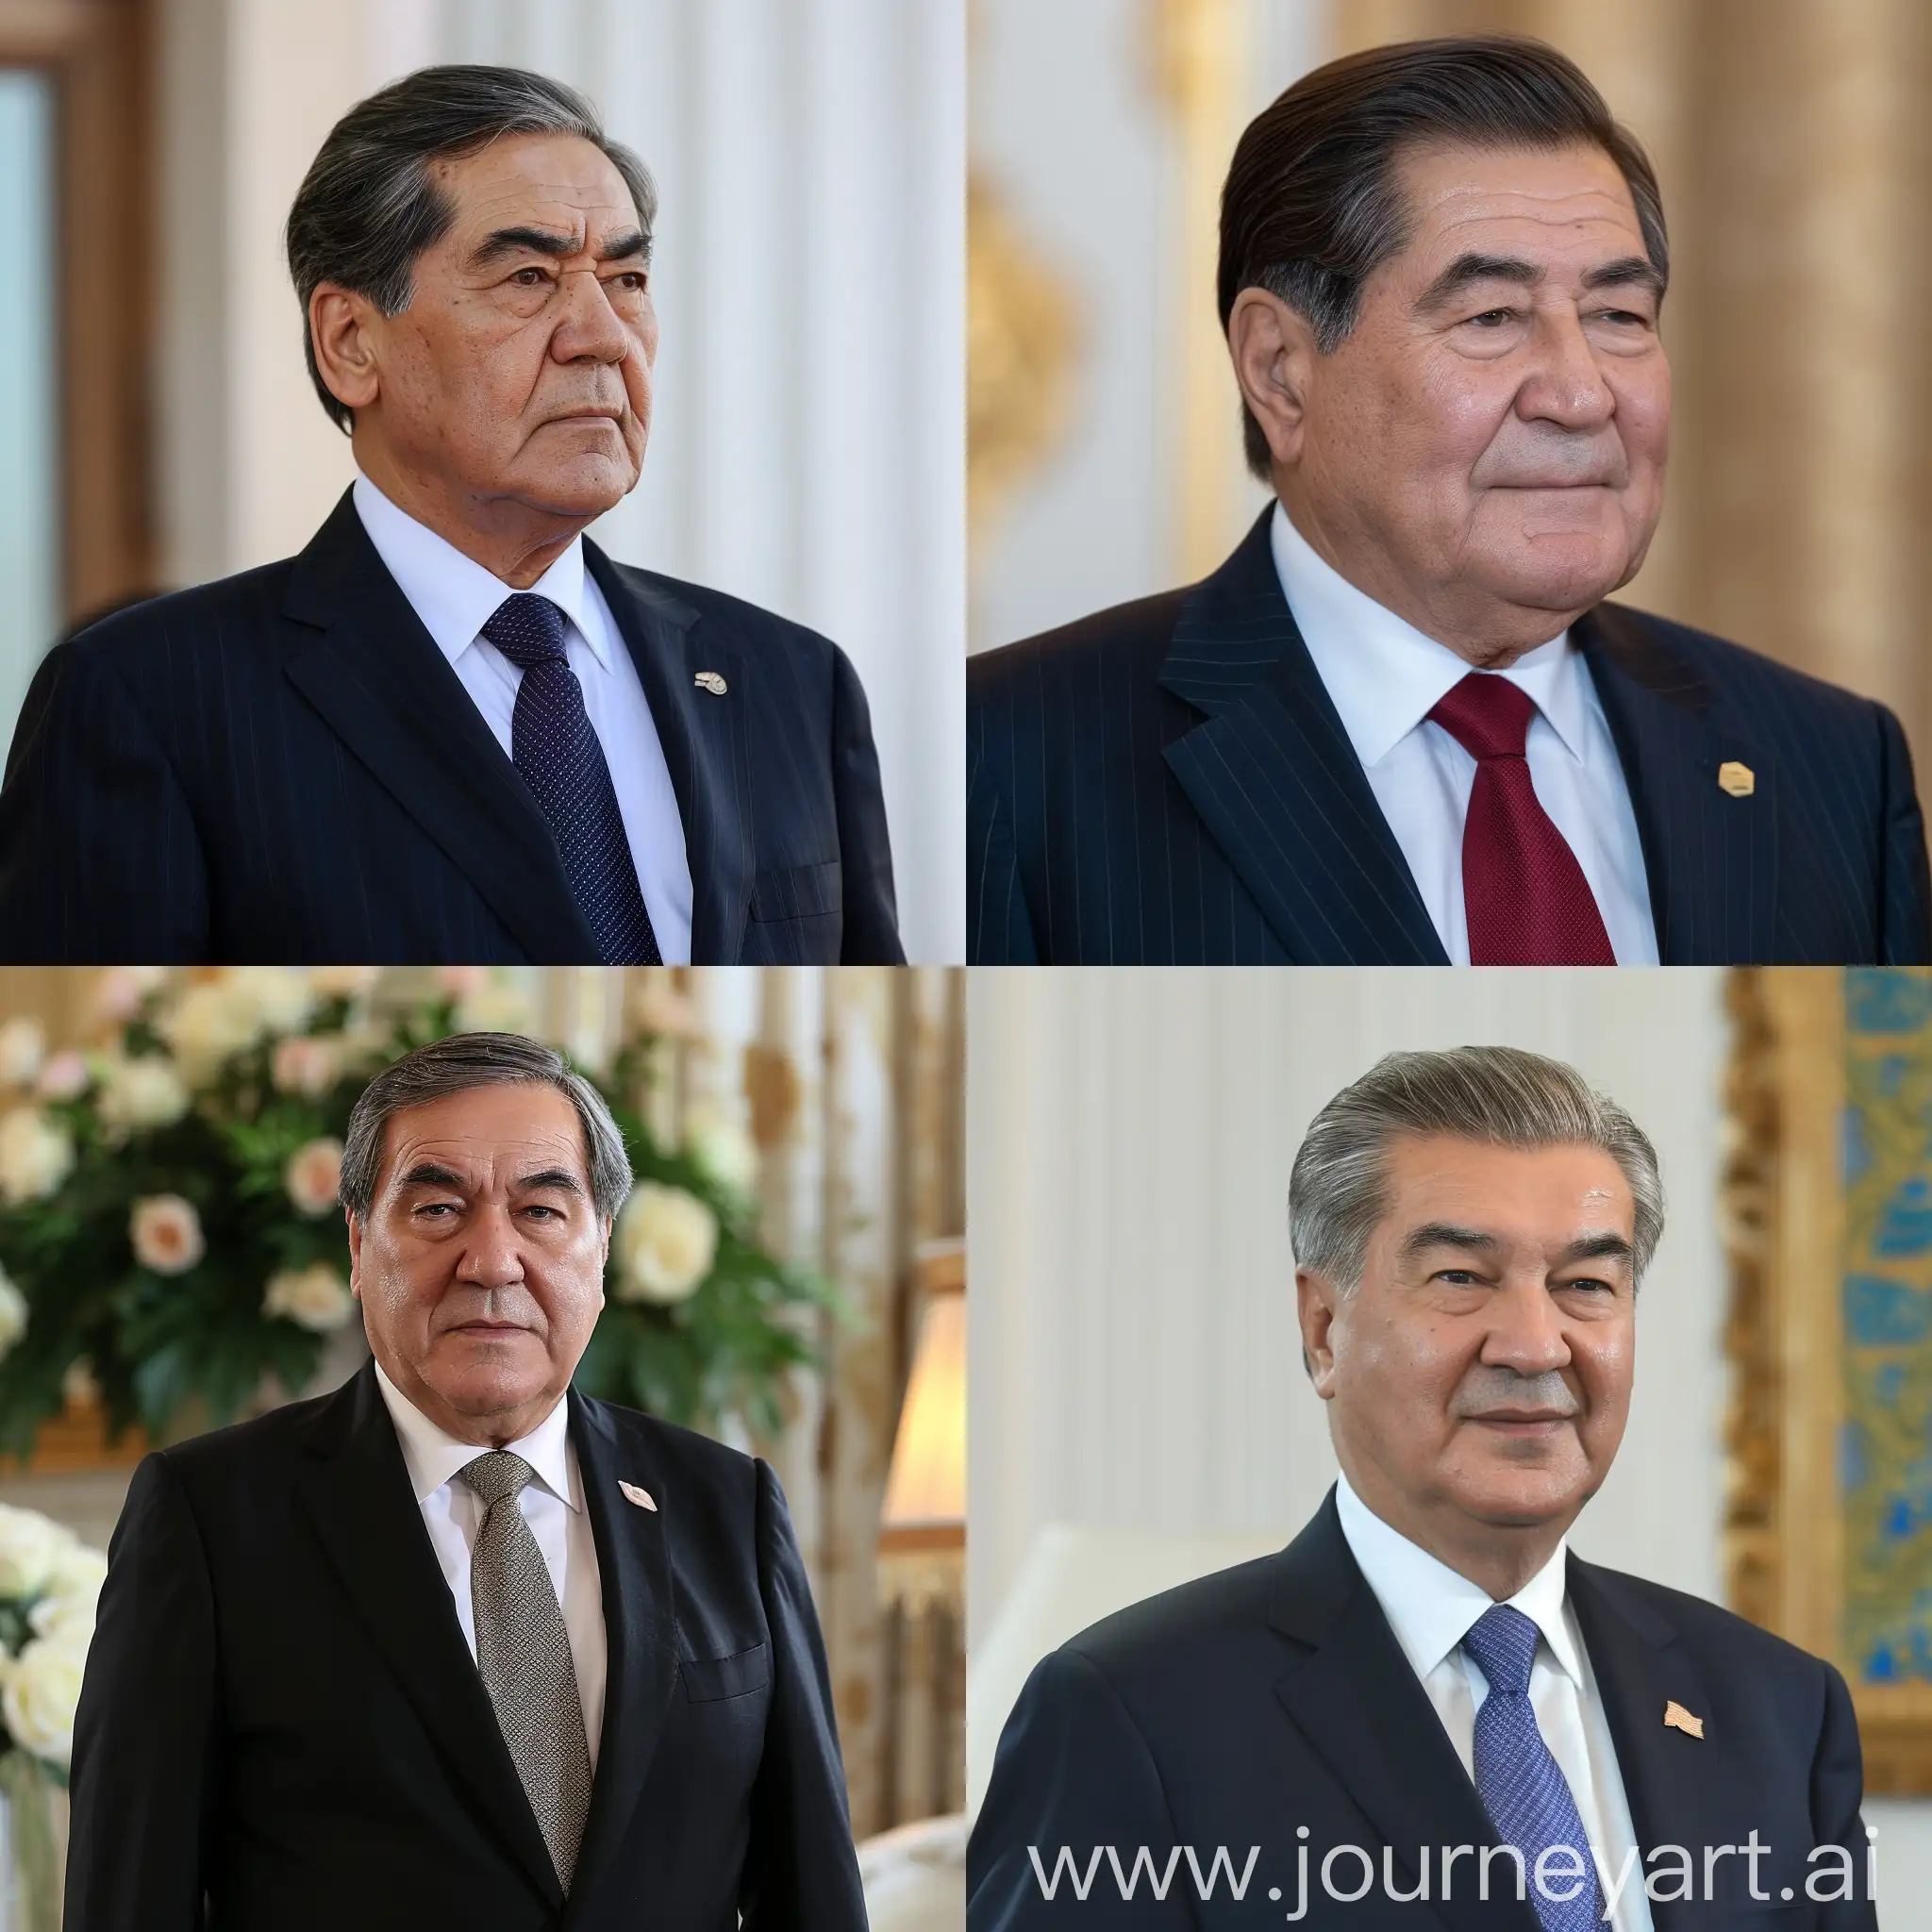 Turkmenistan's president gurbanguly berdimuhamedow is saying "You are welcome Maitrayee".